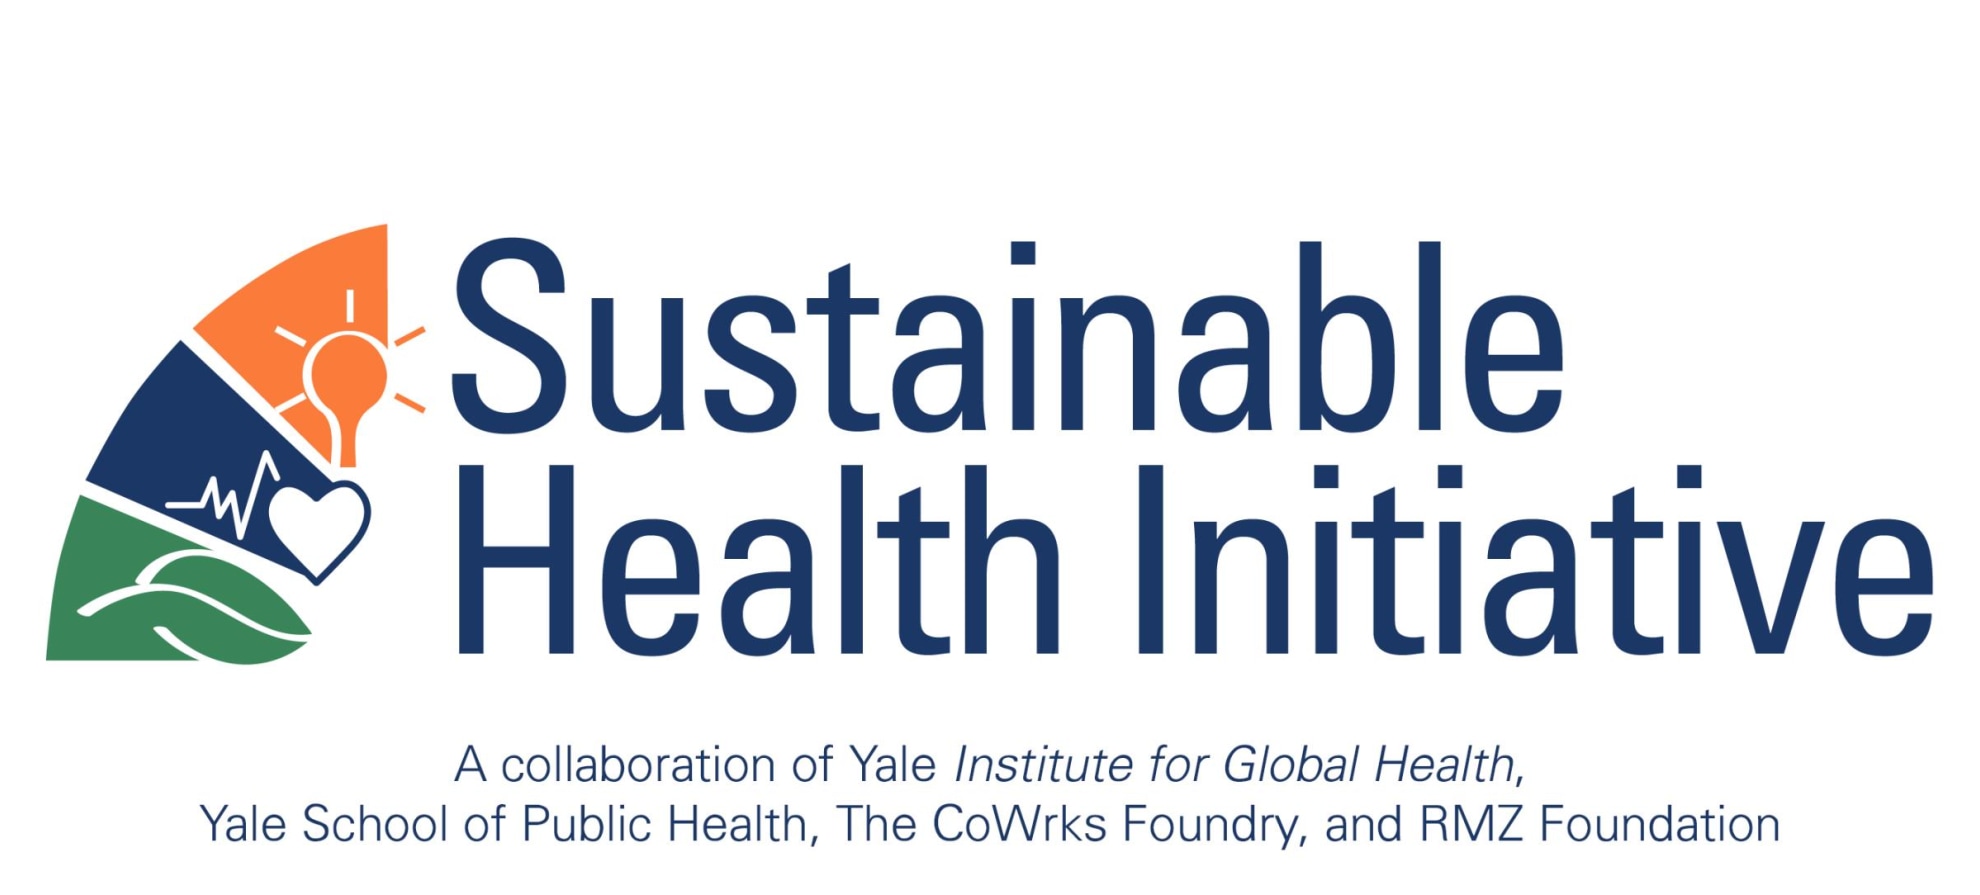 Sustainable Health Initiative Innovatehealth Yale